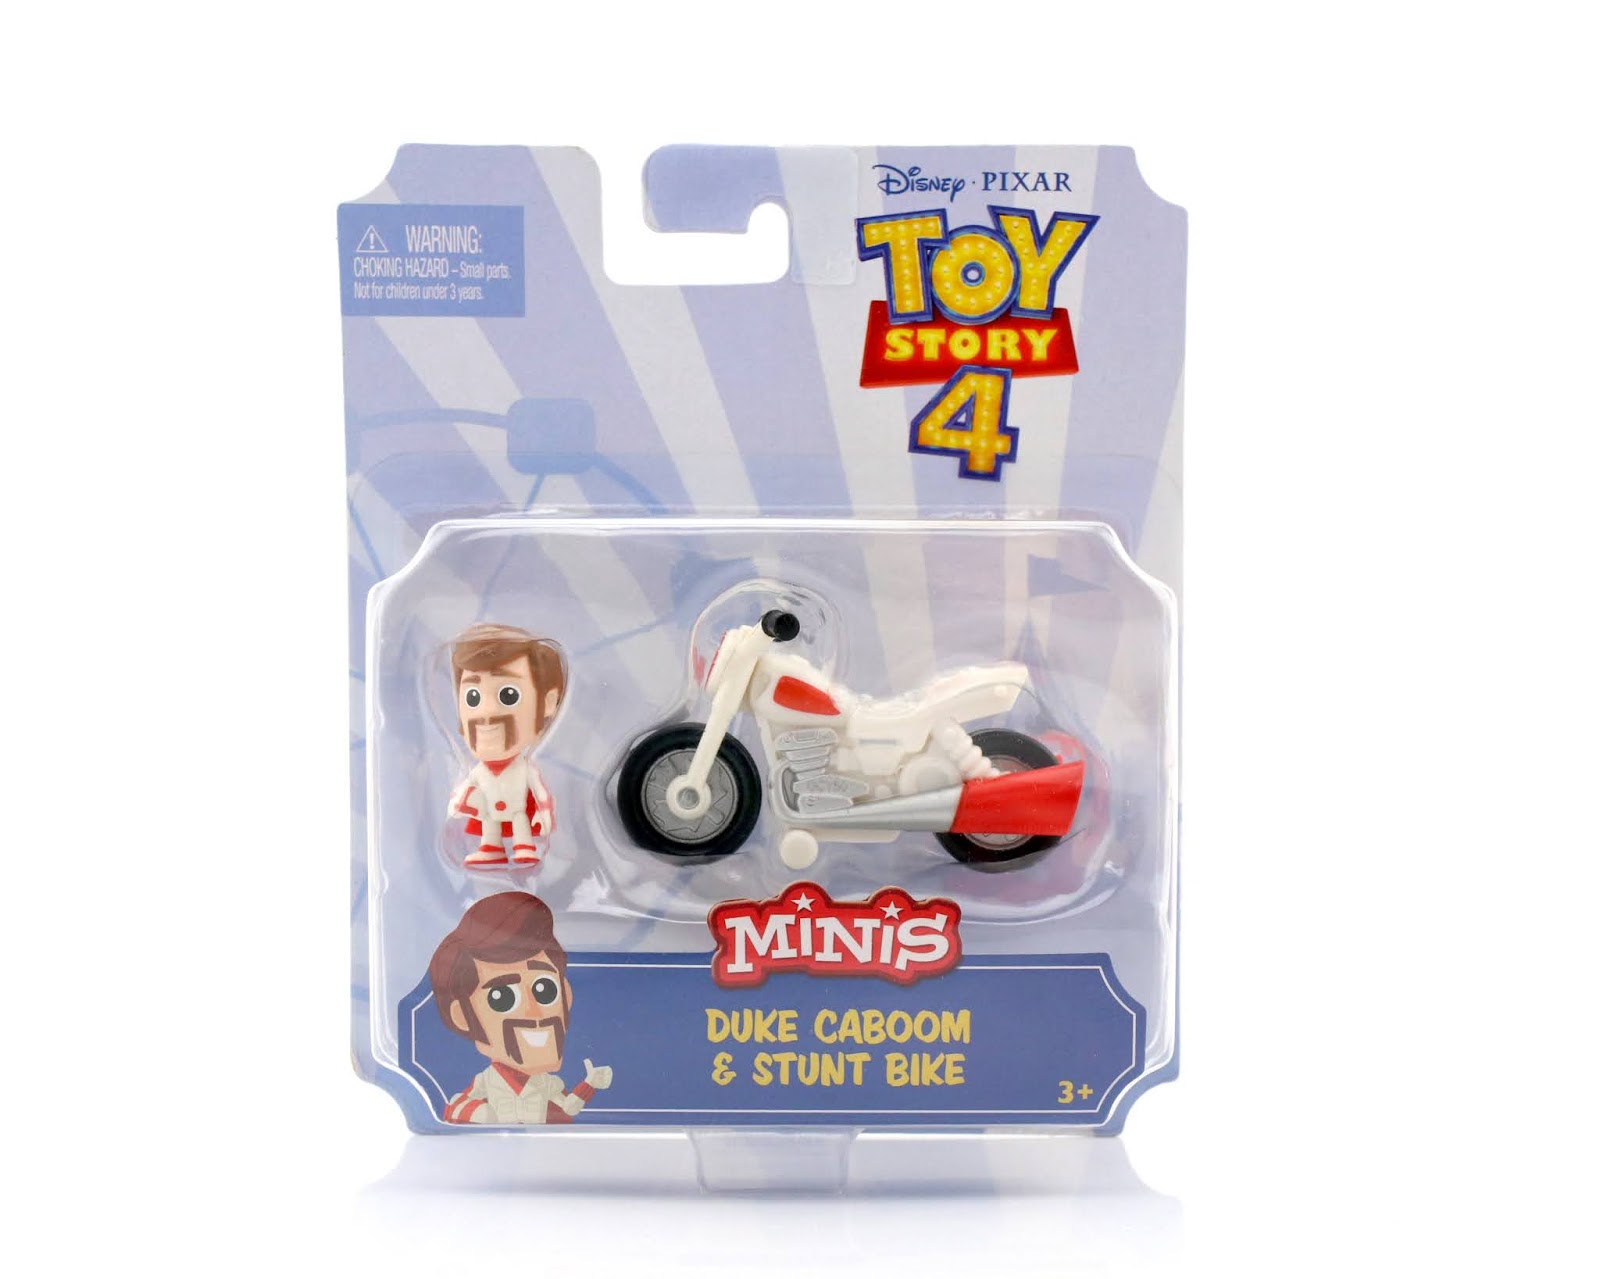 Toy Story 4 "Minis" Vehicle Assortment 